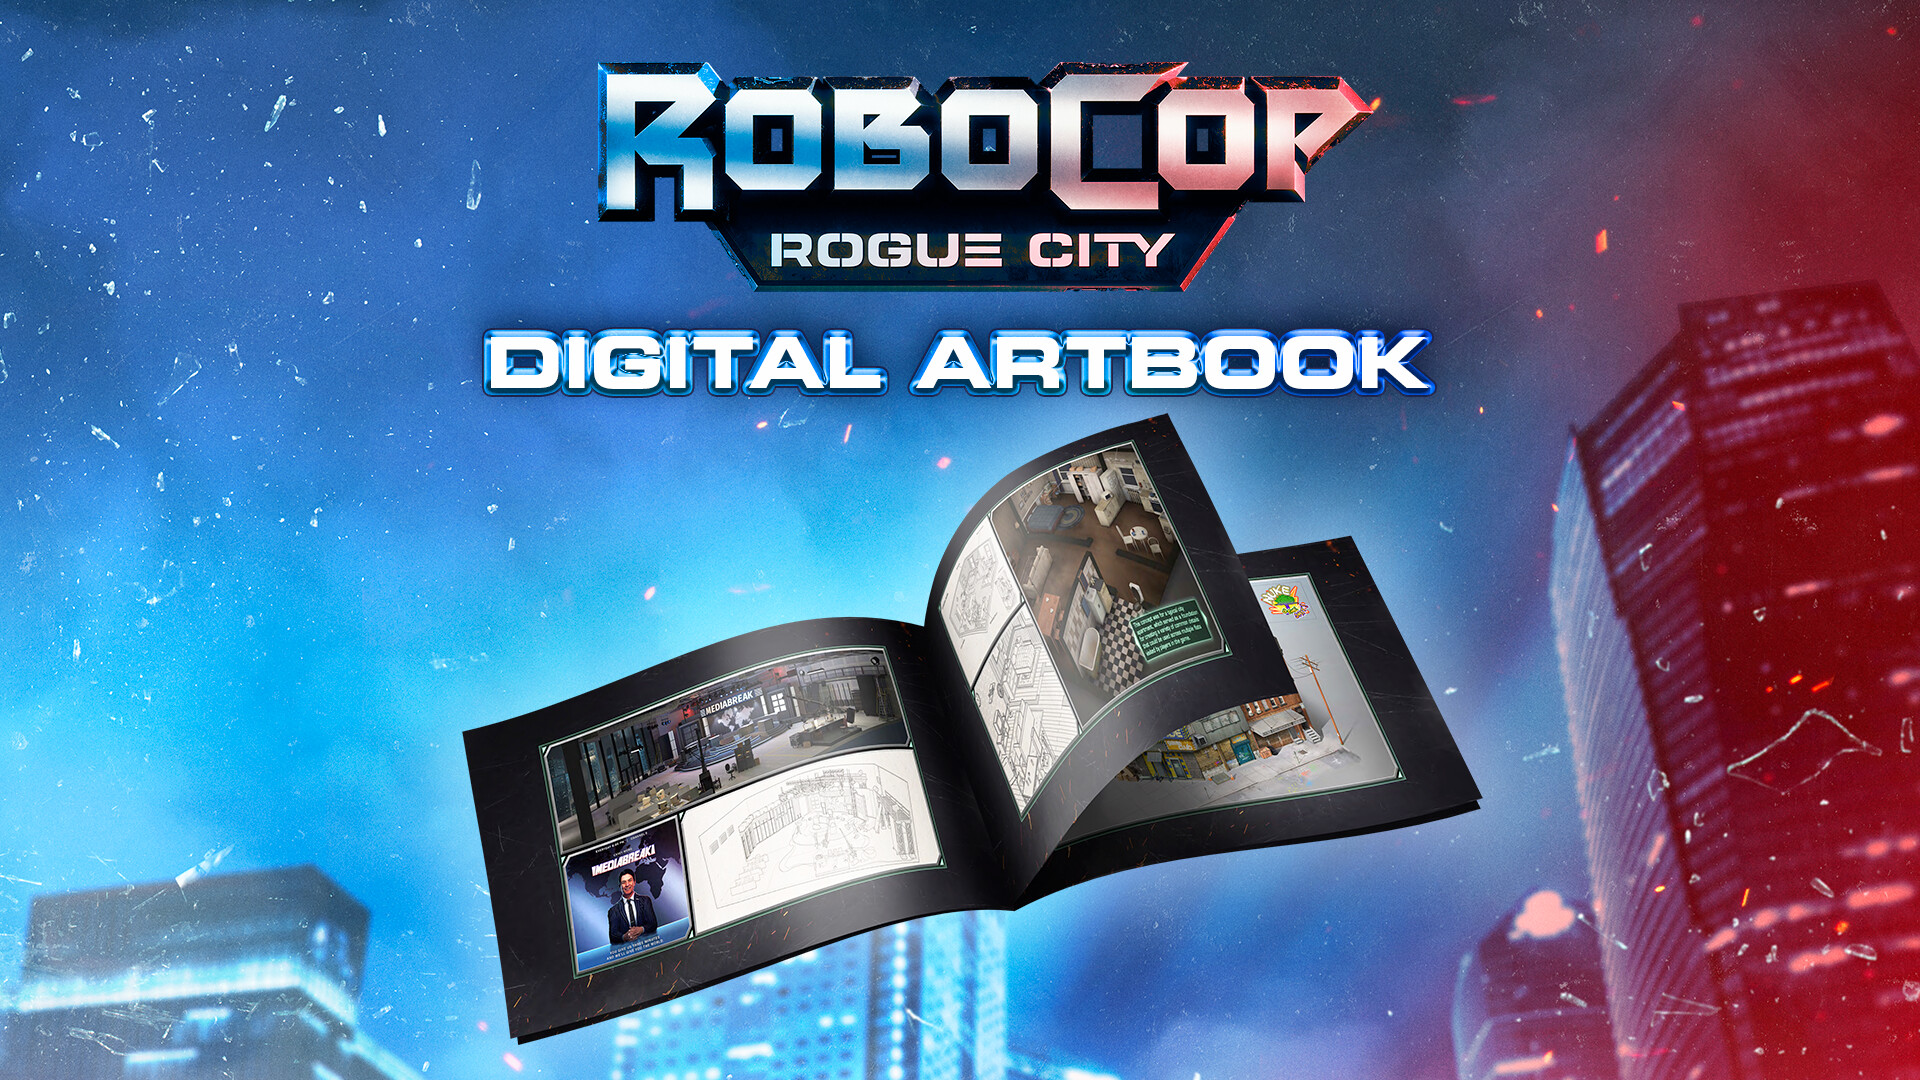 RoboCop: Rogue City - Digital Artbook Featured Screenshot #1